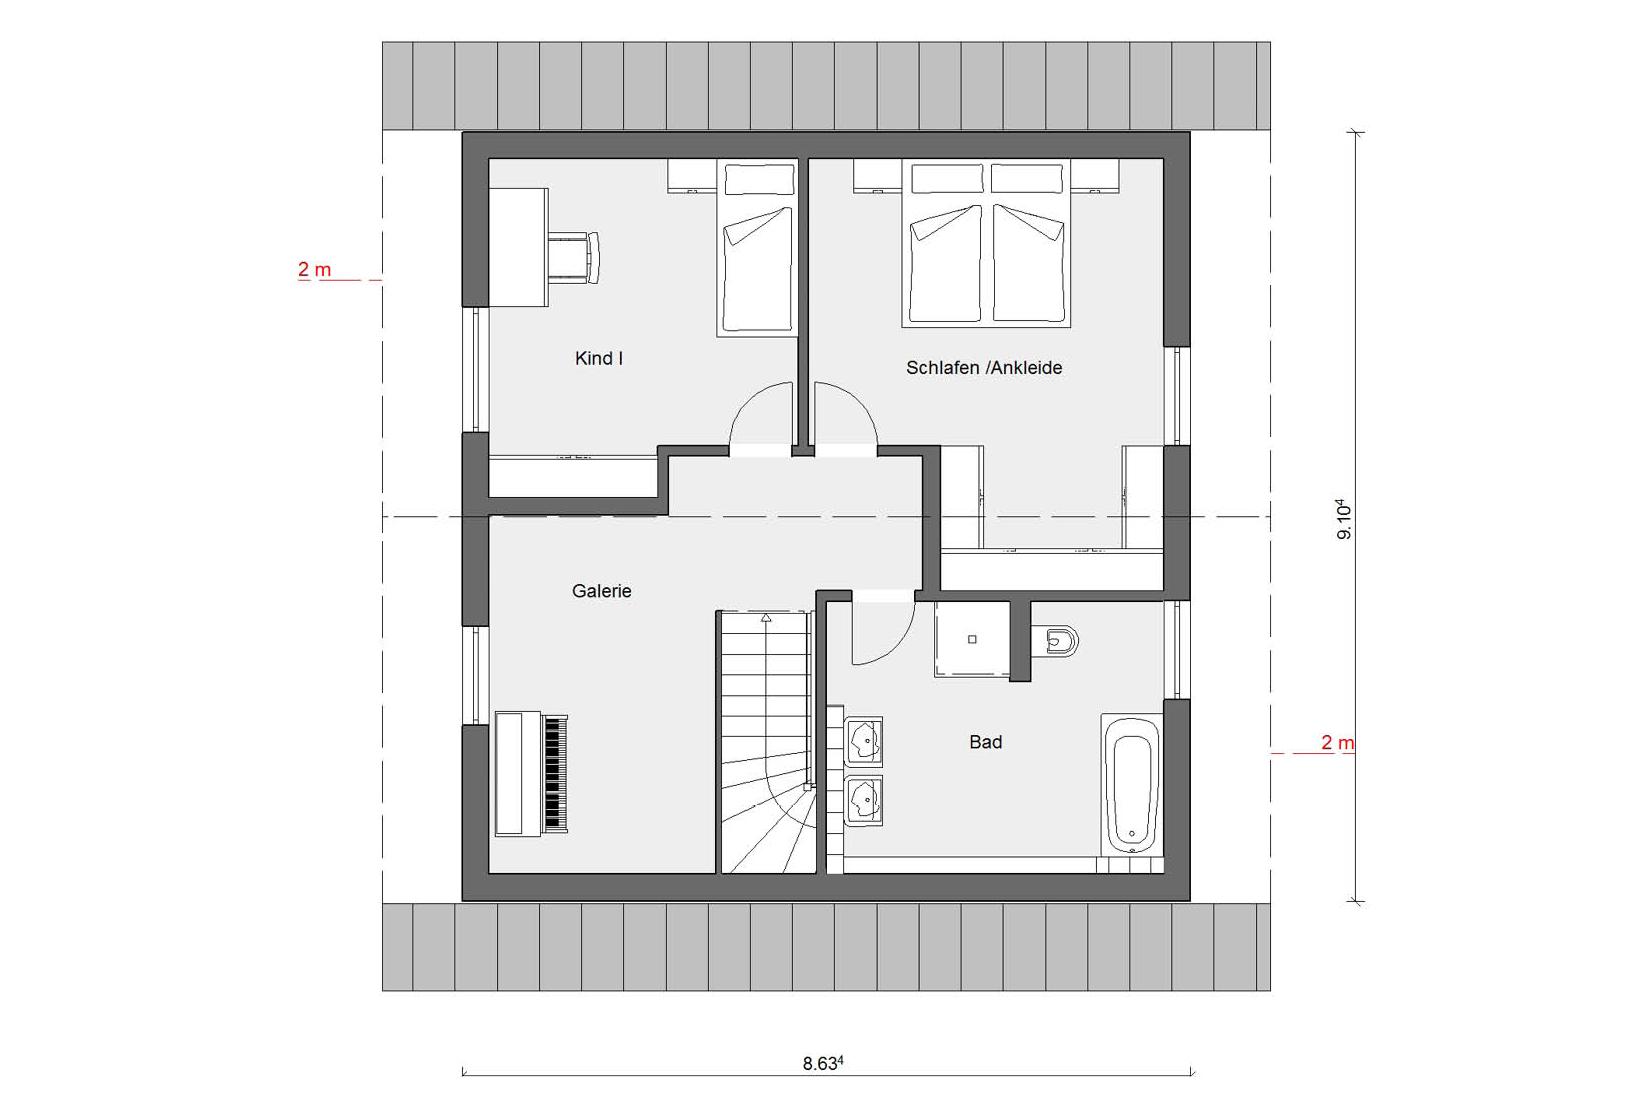 Plan del ático E 15-124.3 Casa unifamiliar compacta